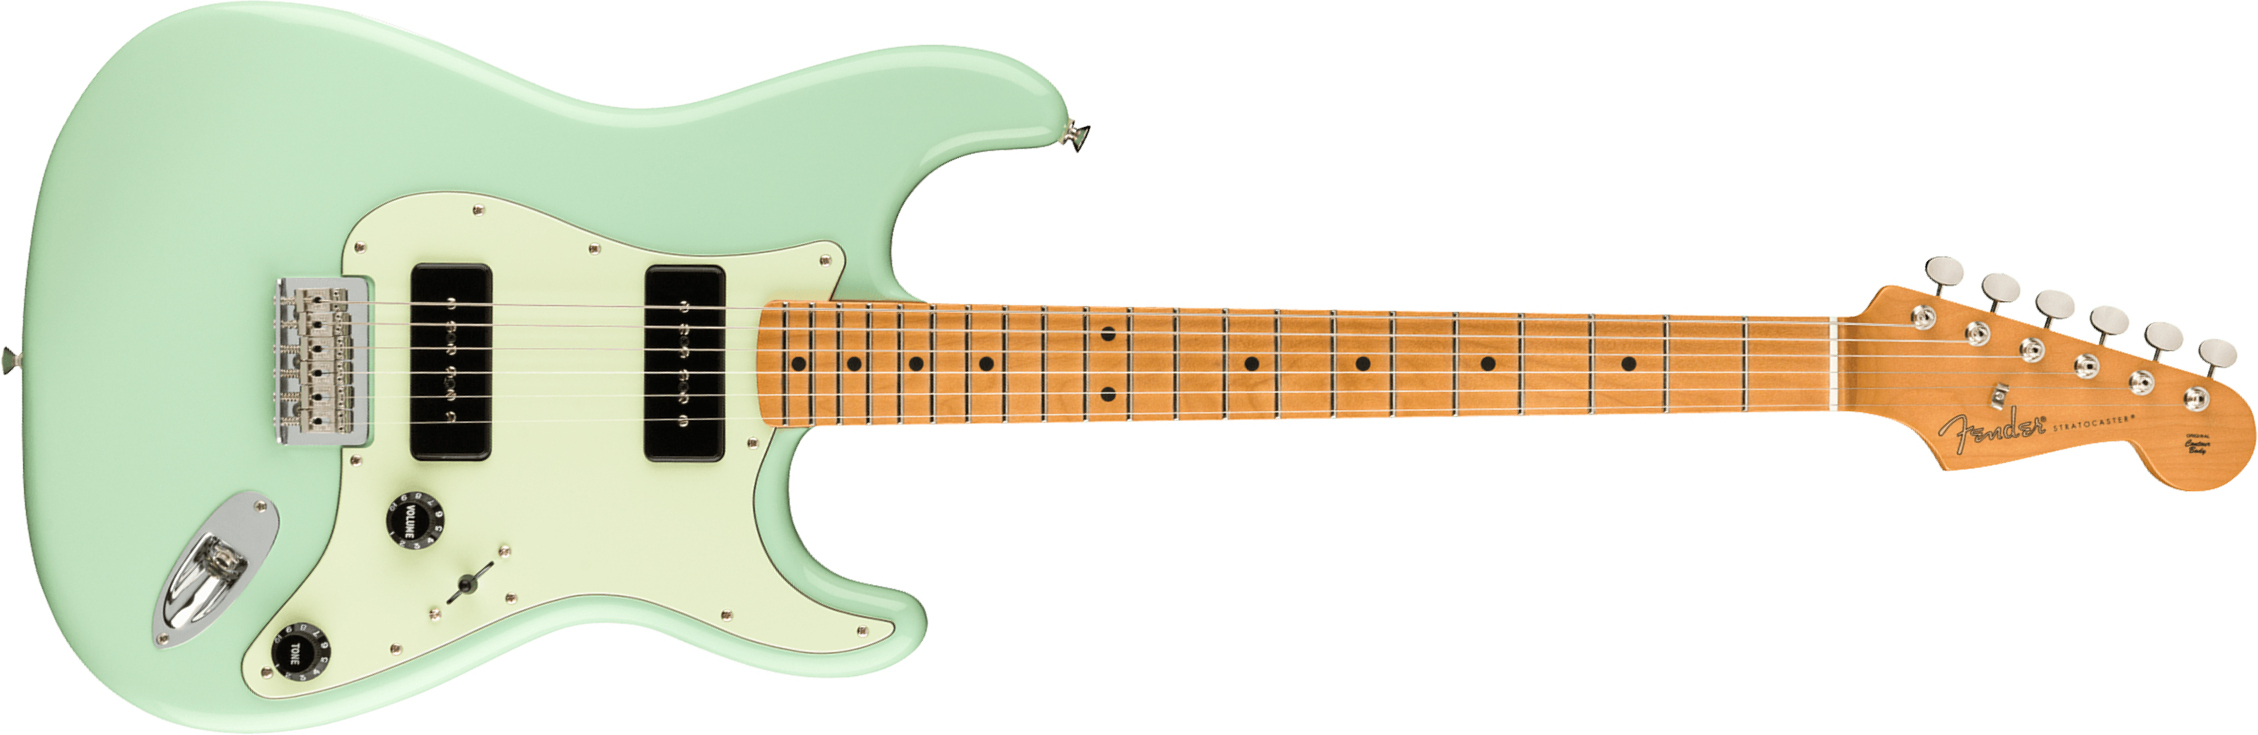 Fender Strat Noventa Mex Ss Ht Mn +housse - Surf Green - E-Gitarre in Str-Form - Main picture